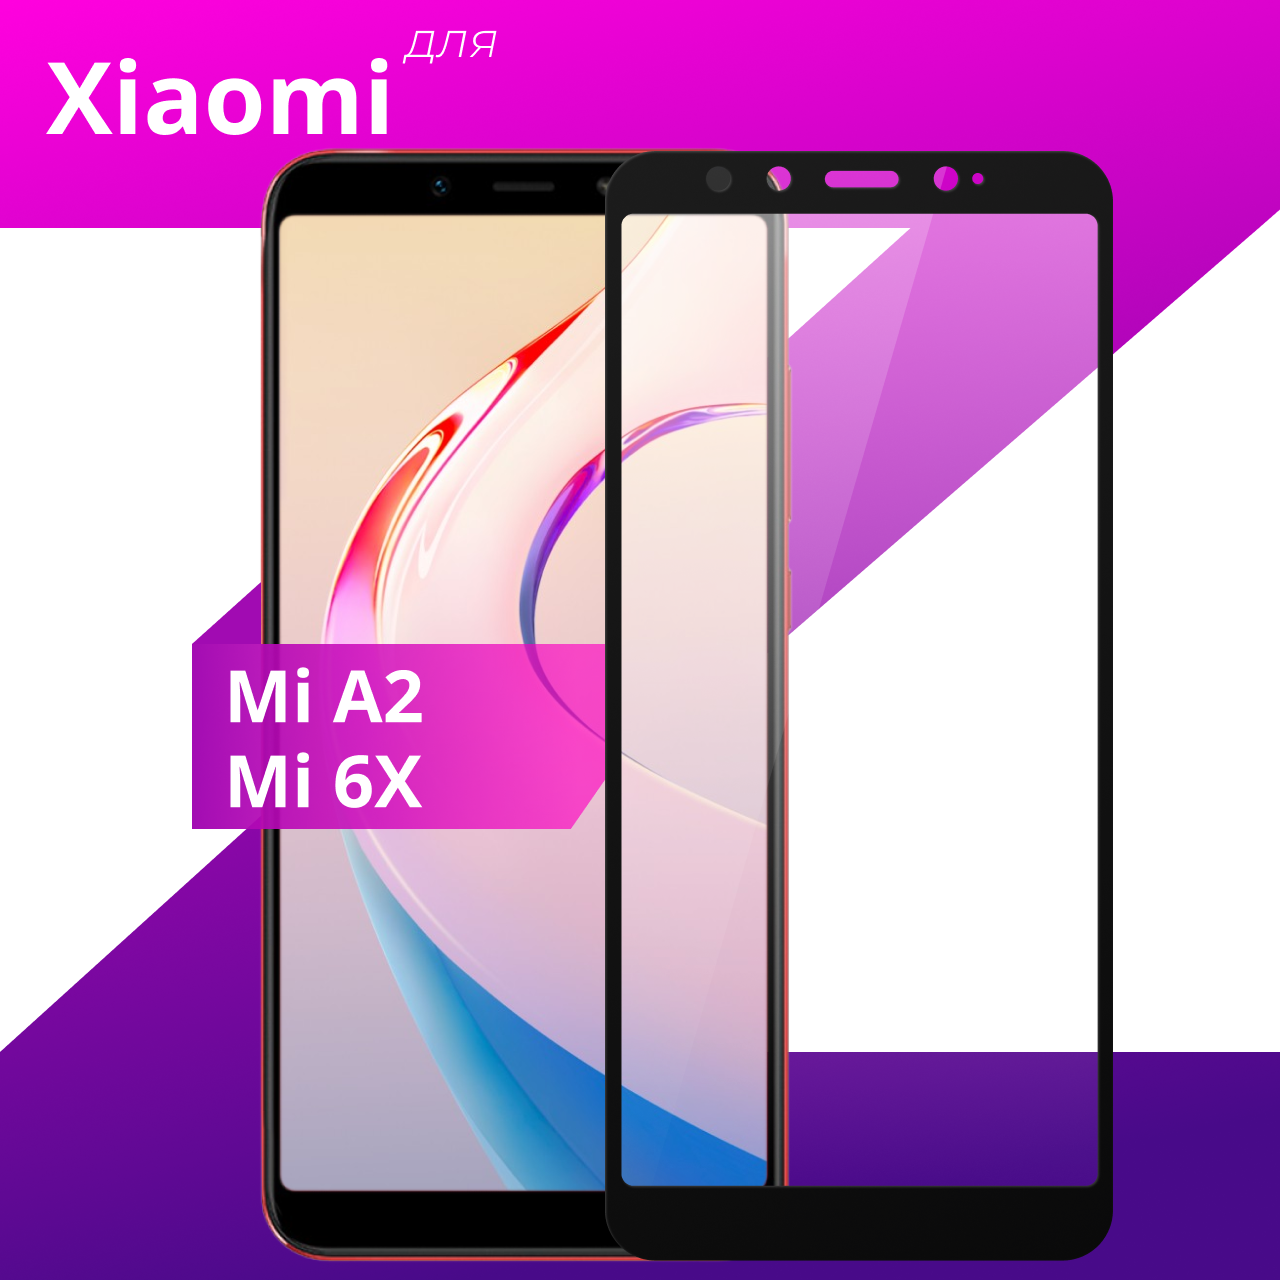 Защитное противоударное стекло для телефона Xiaomi Mi A2 и Xiaomi Mi 6X / Глянцевое стекло с олеофобным покрытием на смартфон Сяоми Ми А2 и Сяоми Ми 6Х